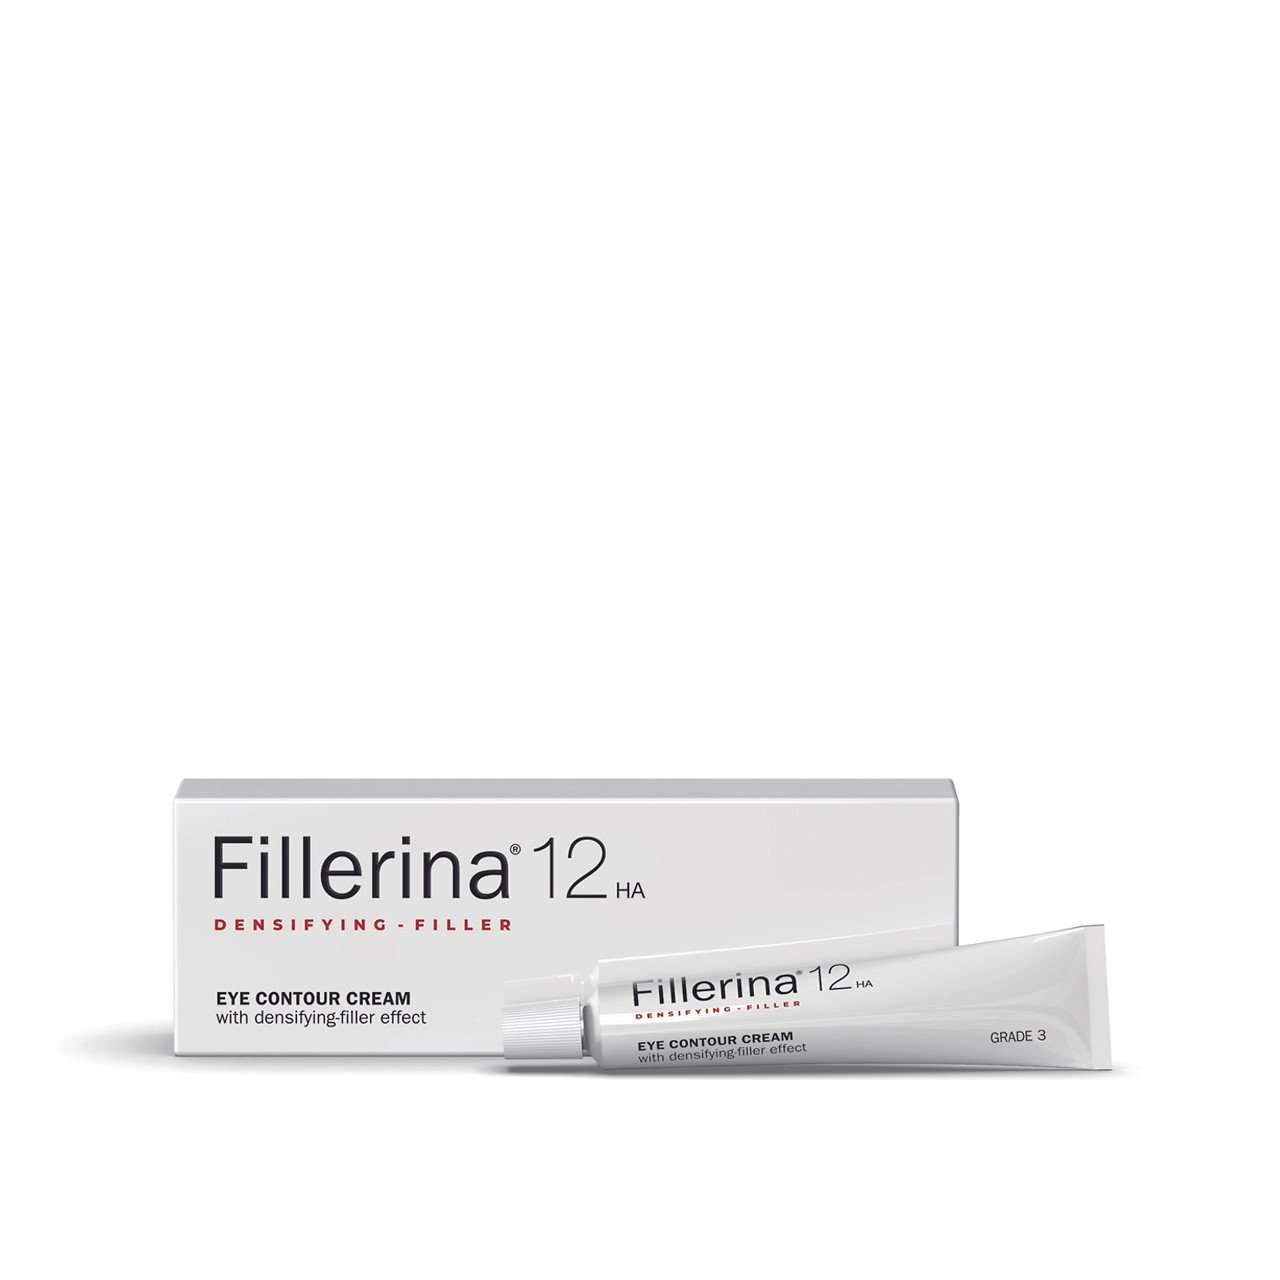 Fillerina 12HA Densifying-Filler Eye Contour Cream Grade 3 15ml (0.51fl oz)